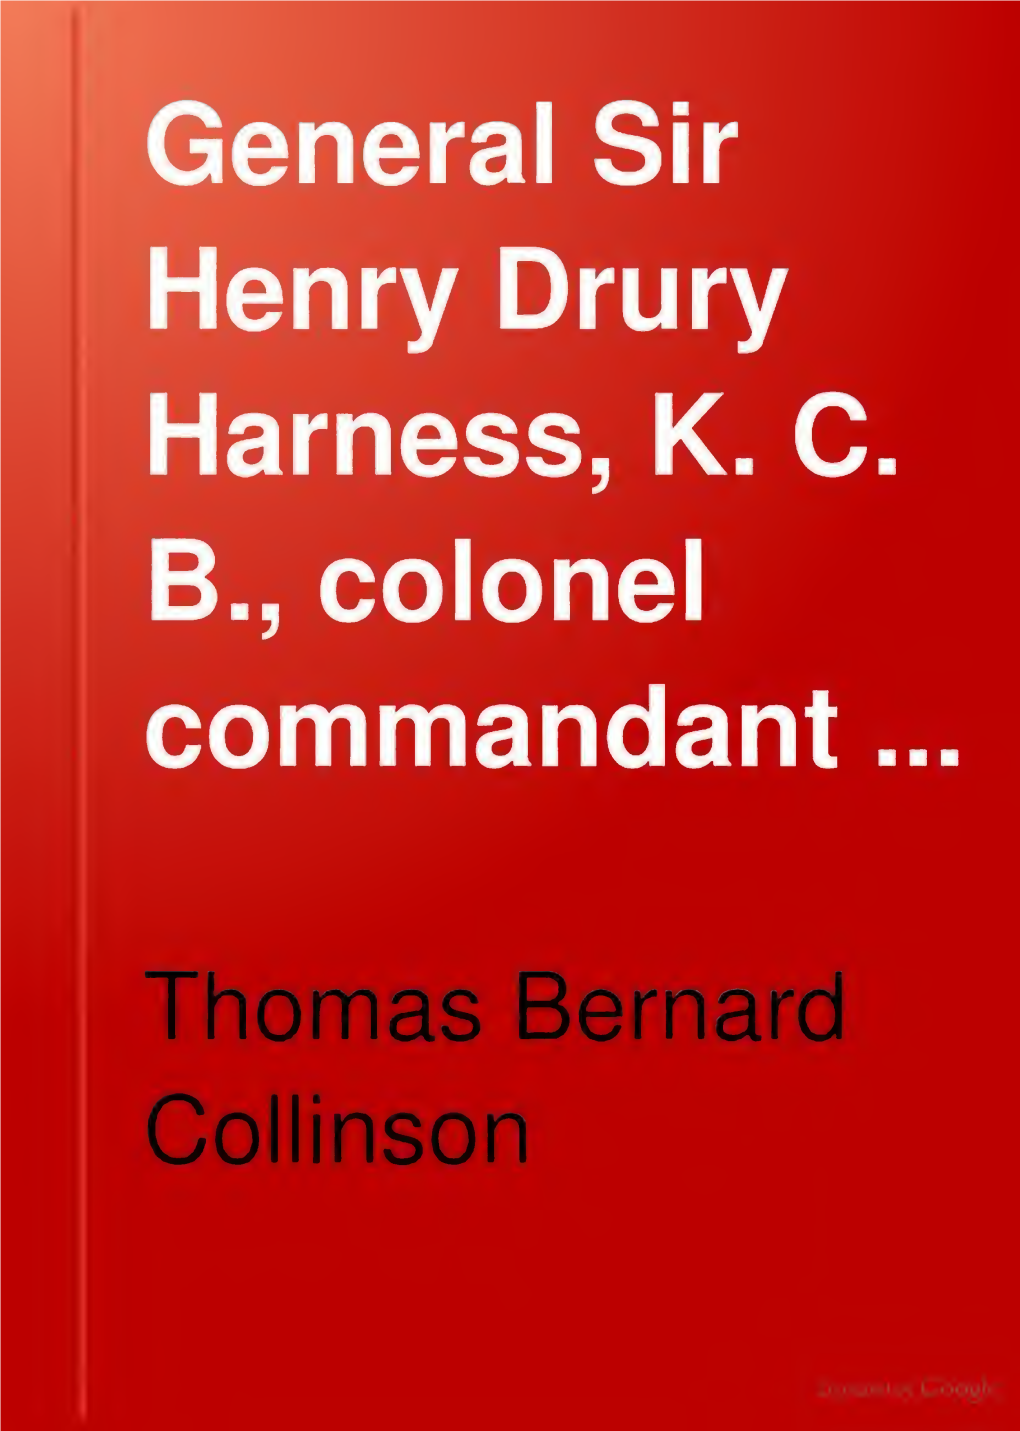 General Sir Henry Drury Harness, KCB, Colonel Commandant Royal